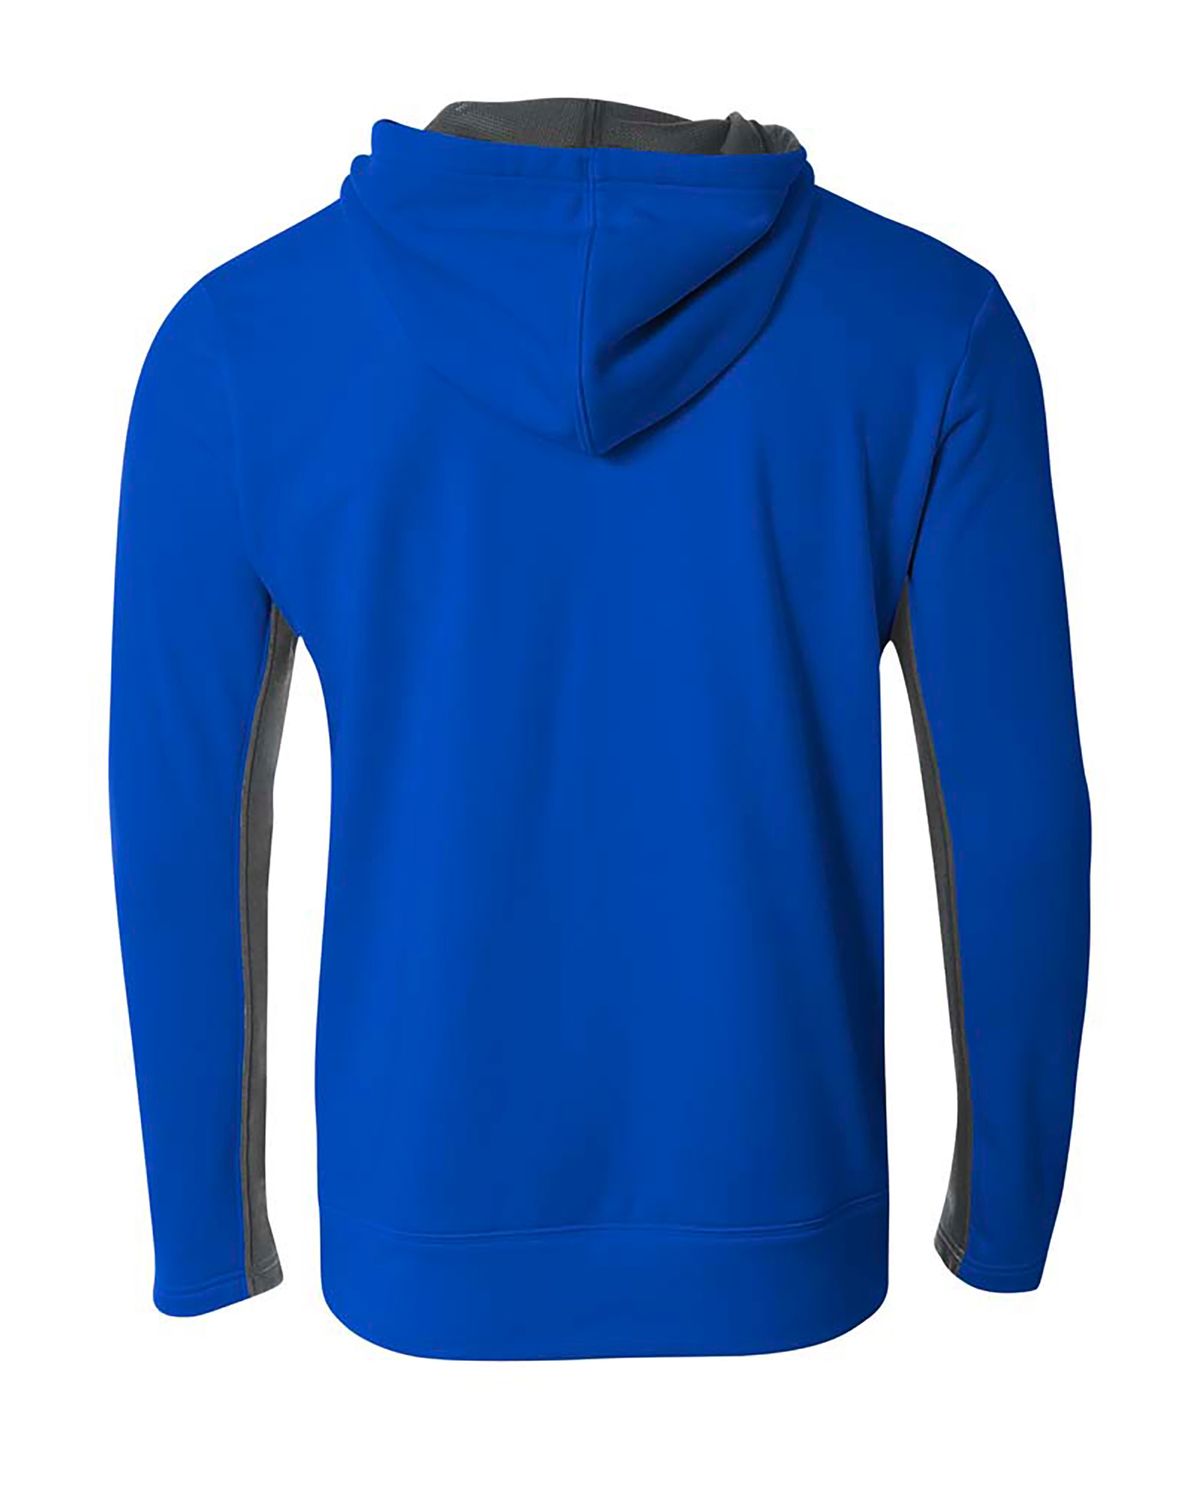 'A4 NB4251 Youth Tech Fleece Full-Zip Hooded Sweatshirt'